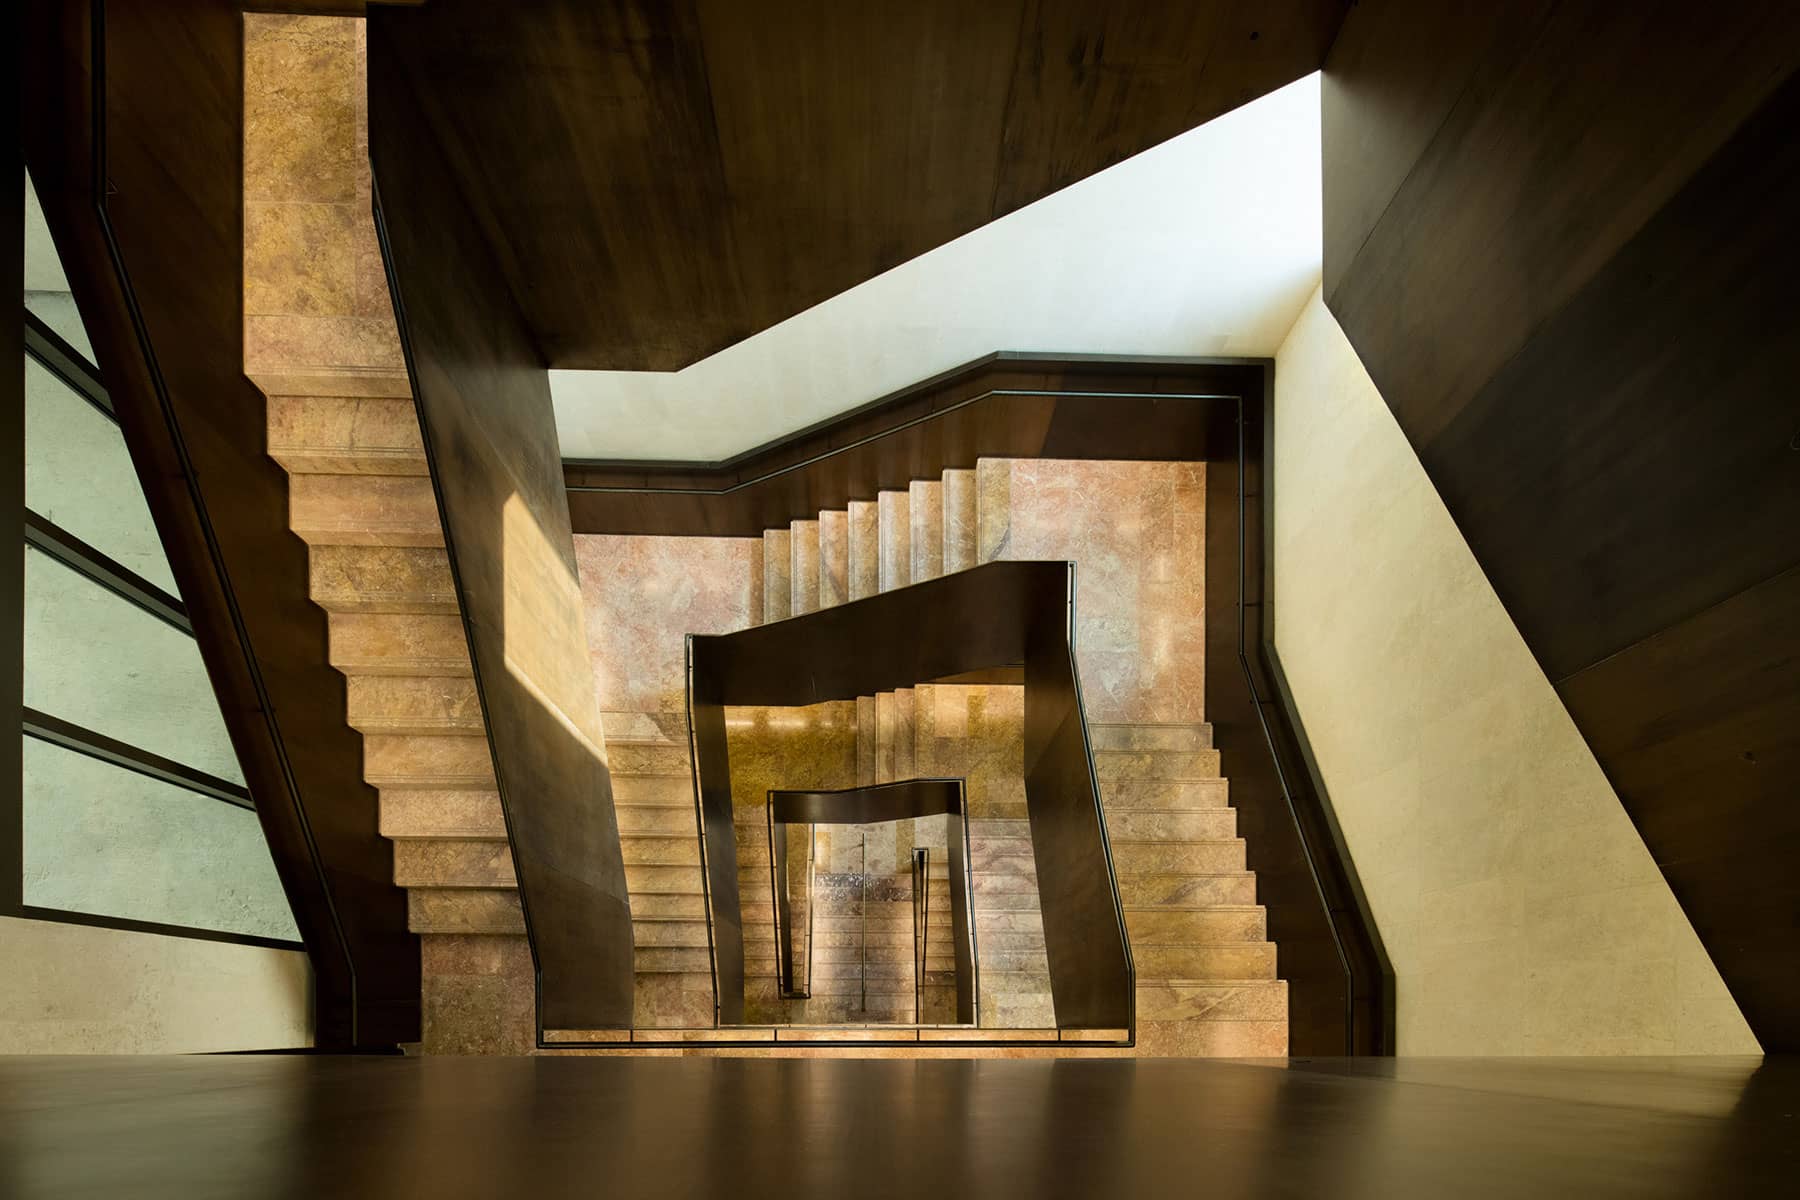 Architecture Photography Qatar: Contemporary stairwell image, Msheireb, Doha, Qatar.